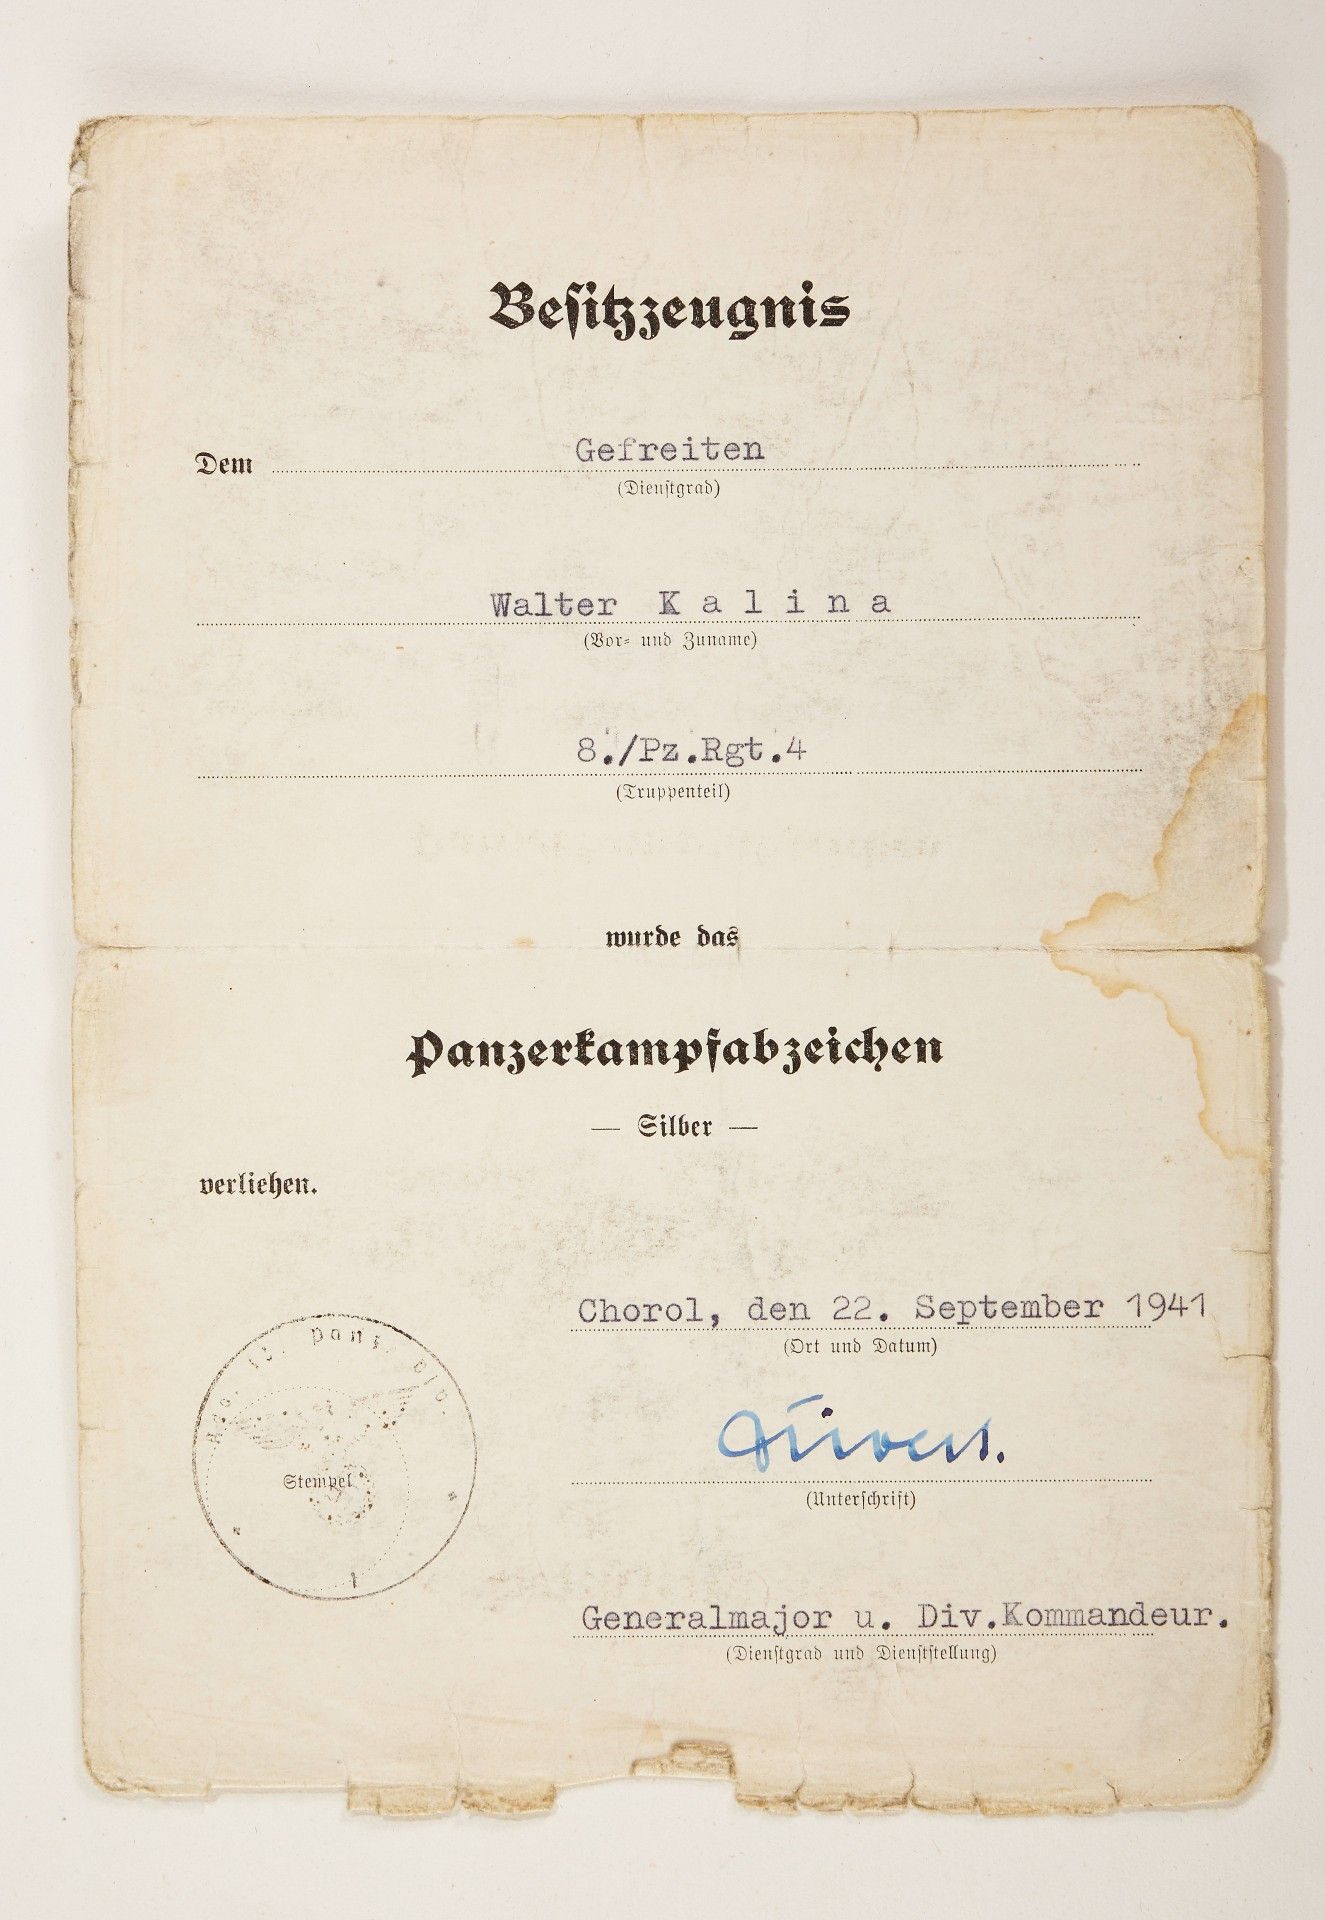 1933-1945: Dokumentennachlass des Unteroffiziers Walter Kalina, 8./Pz.Rgt.4 - Image 2 of 6